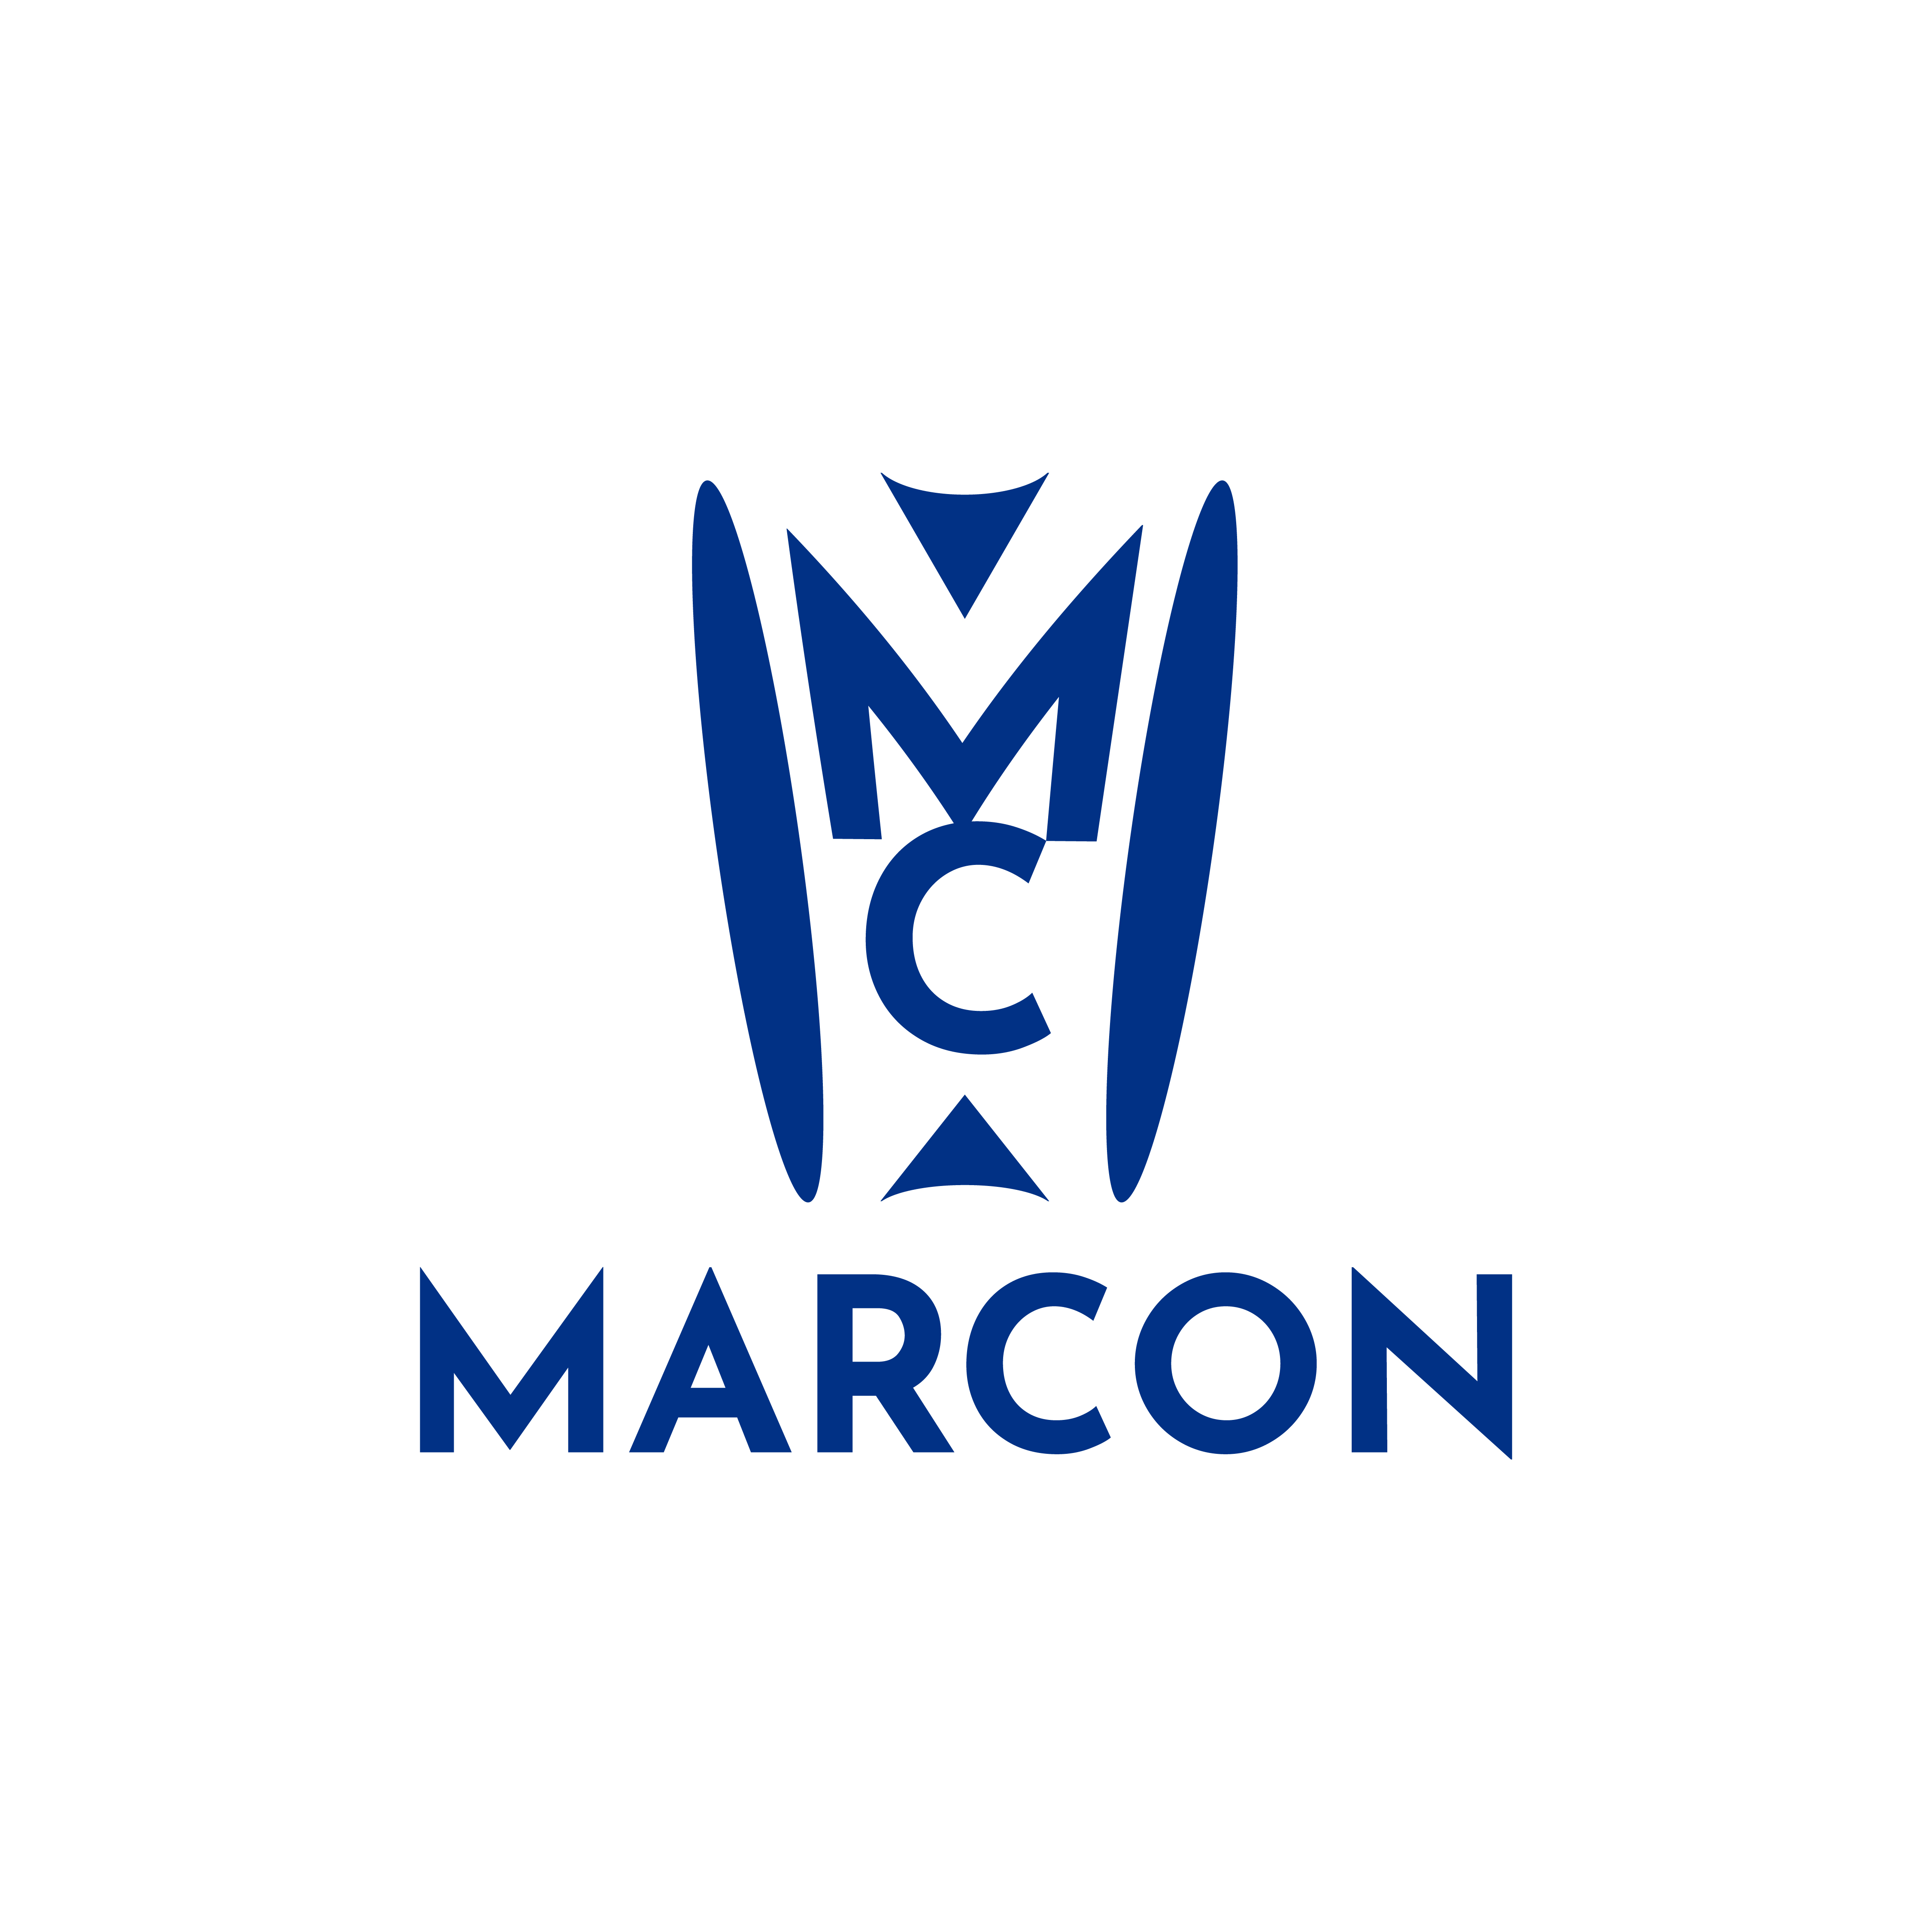 MARCON_LOGO_BLACK_1080x1080-07